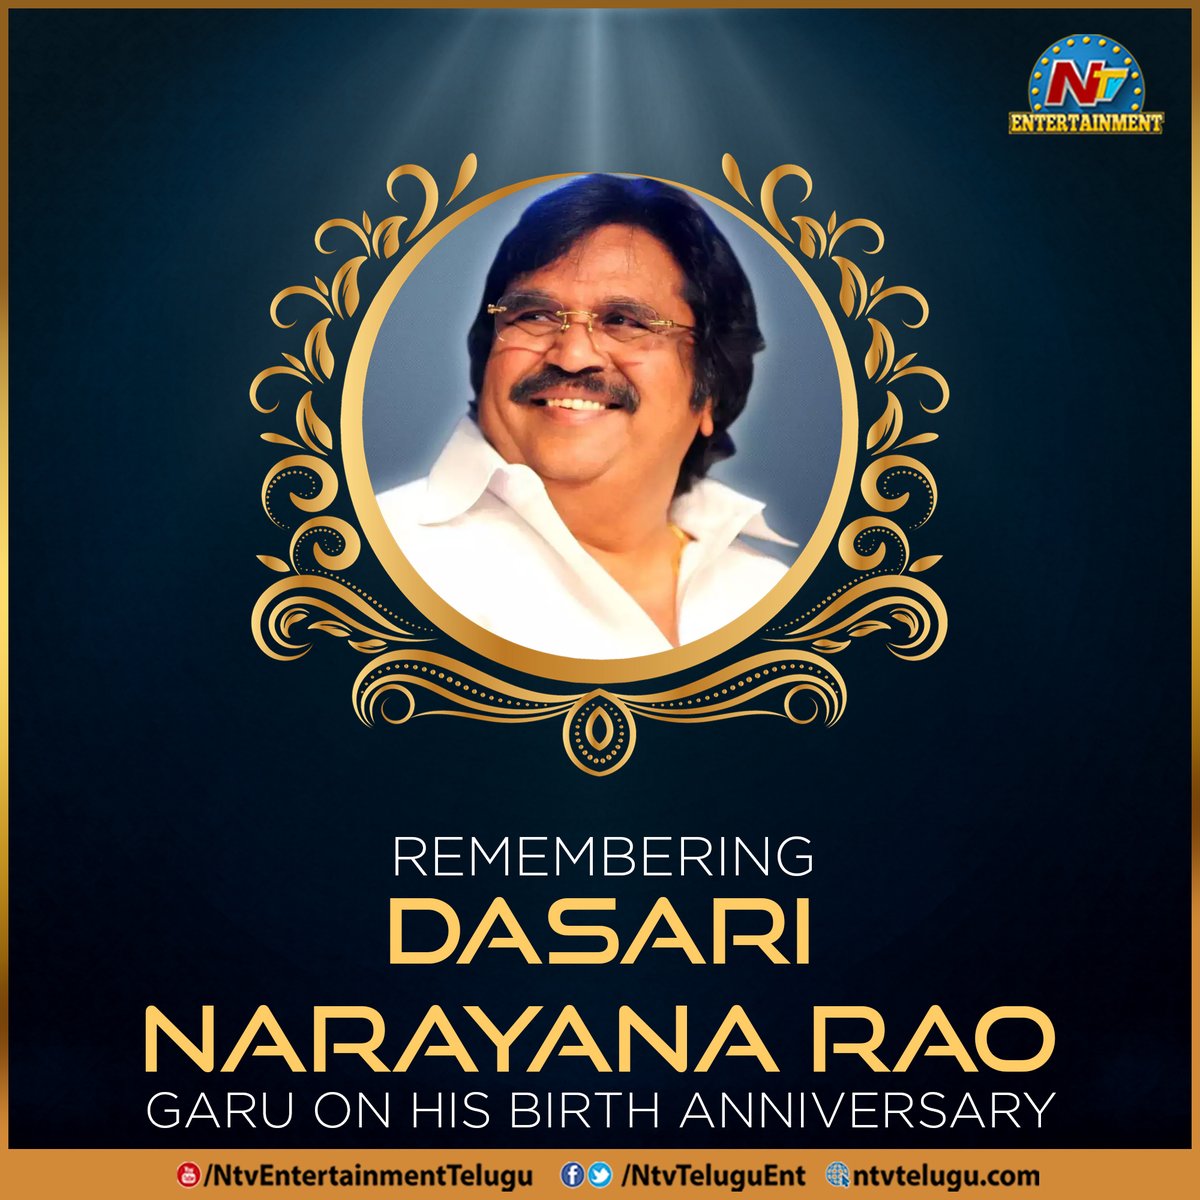 Remembering Director / Actor Dasari Narayana Rao Garu On His Birth Anniversary

#DasariNarayanaRao #Dasari #Actor #Director #tollywood #BirthAnniversary #NTVENT